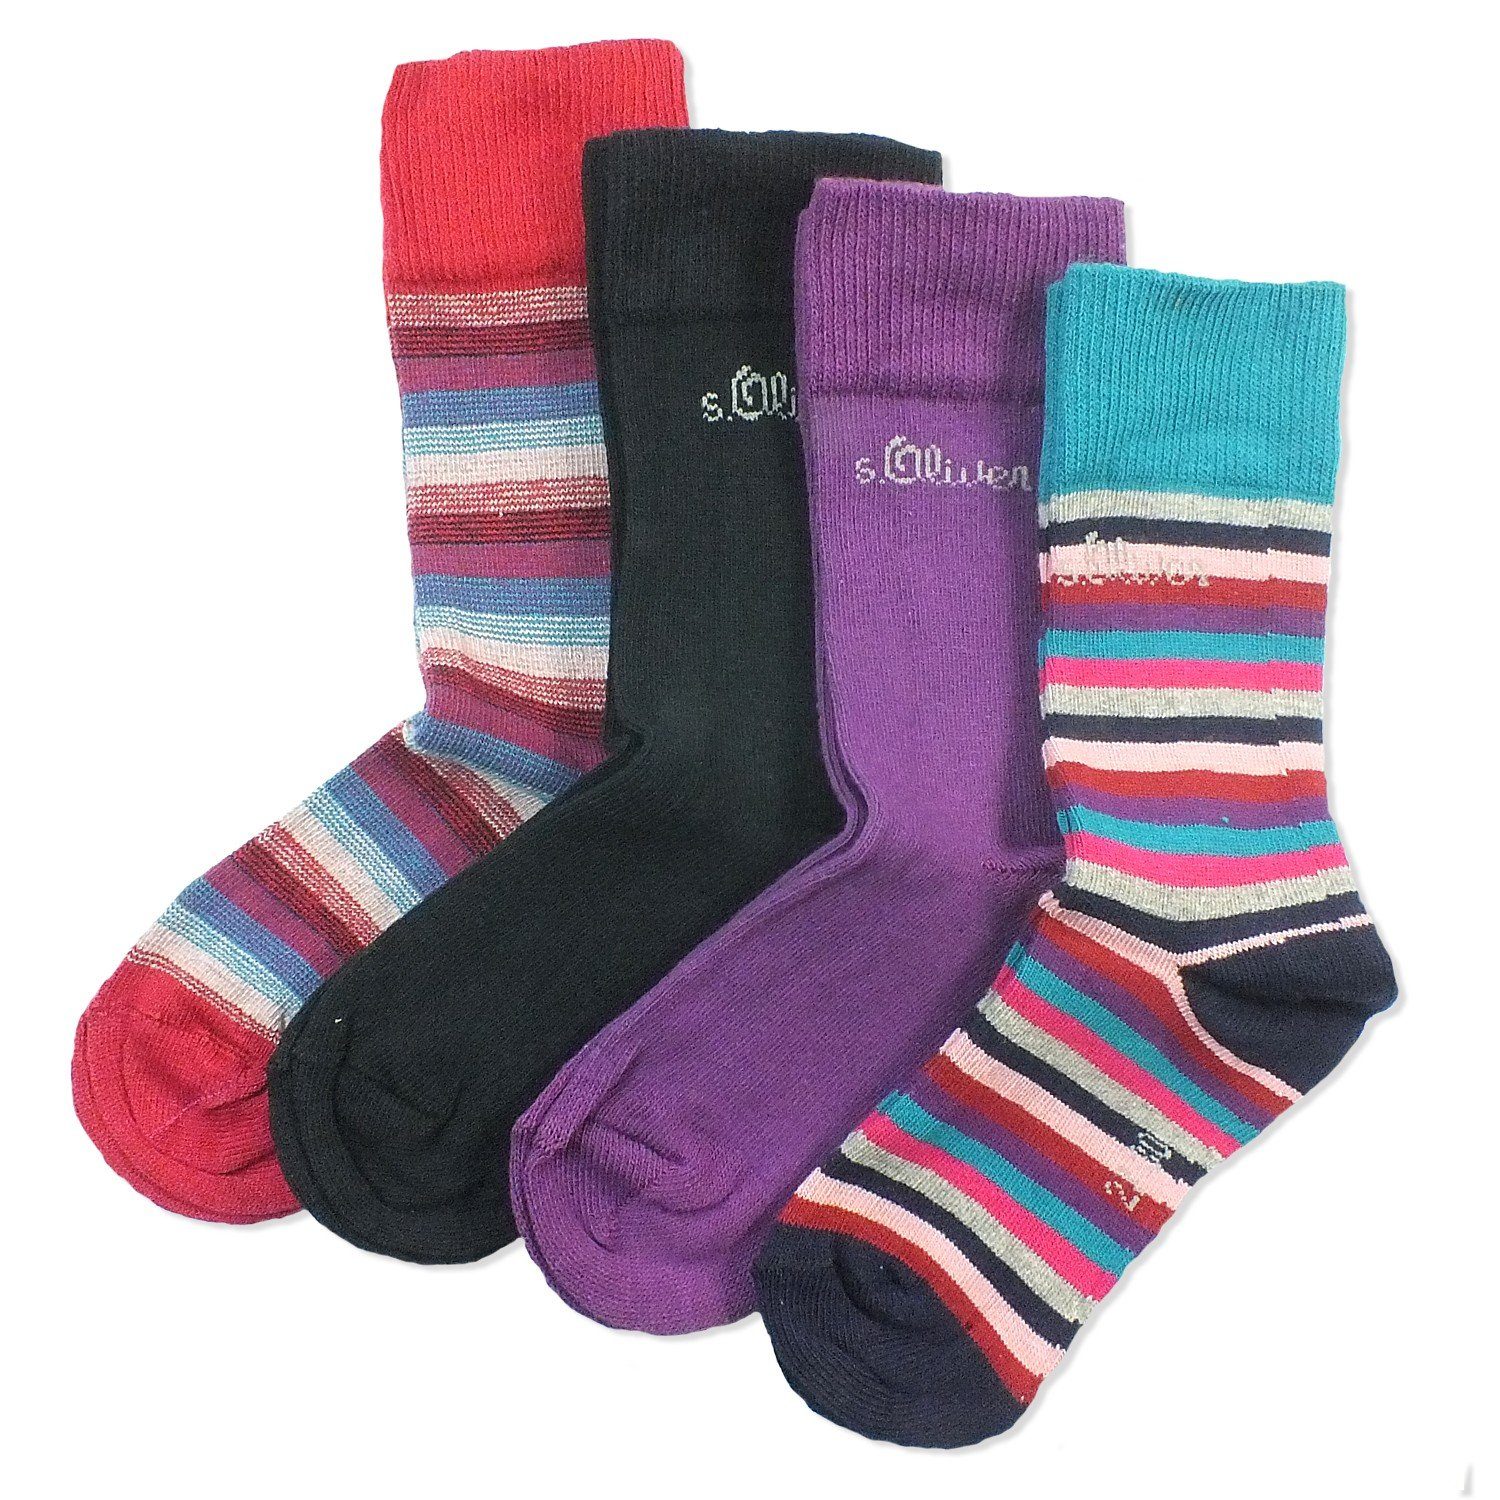 s.Oliver Langsocken S20306 (Packung, 4-Paar, 4 Paar) Kinder Socken, Jungen & Mädchen mit Baumwolle, Kindersocken